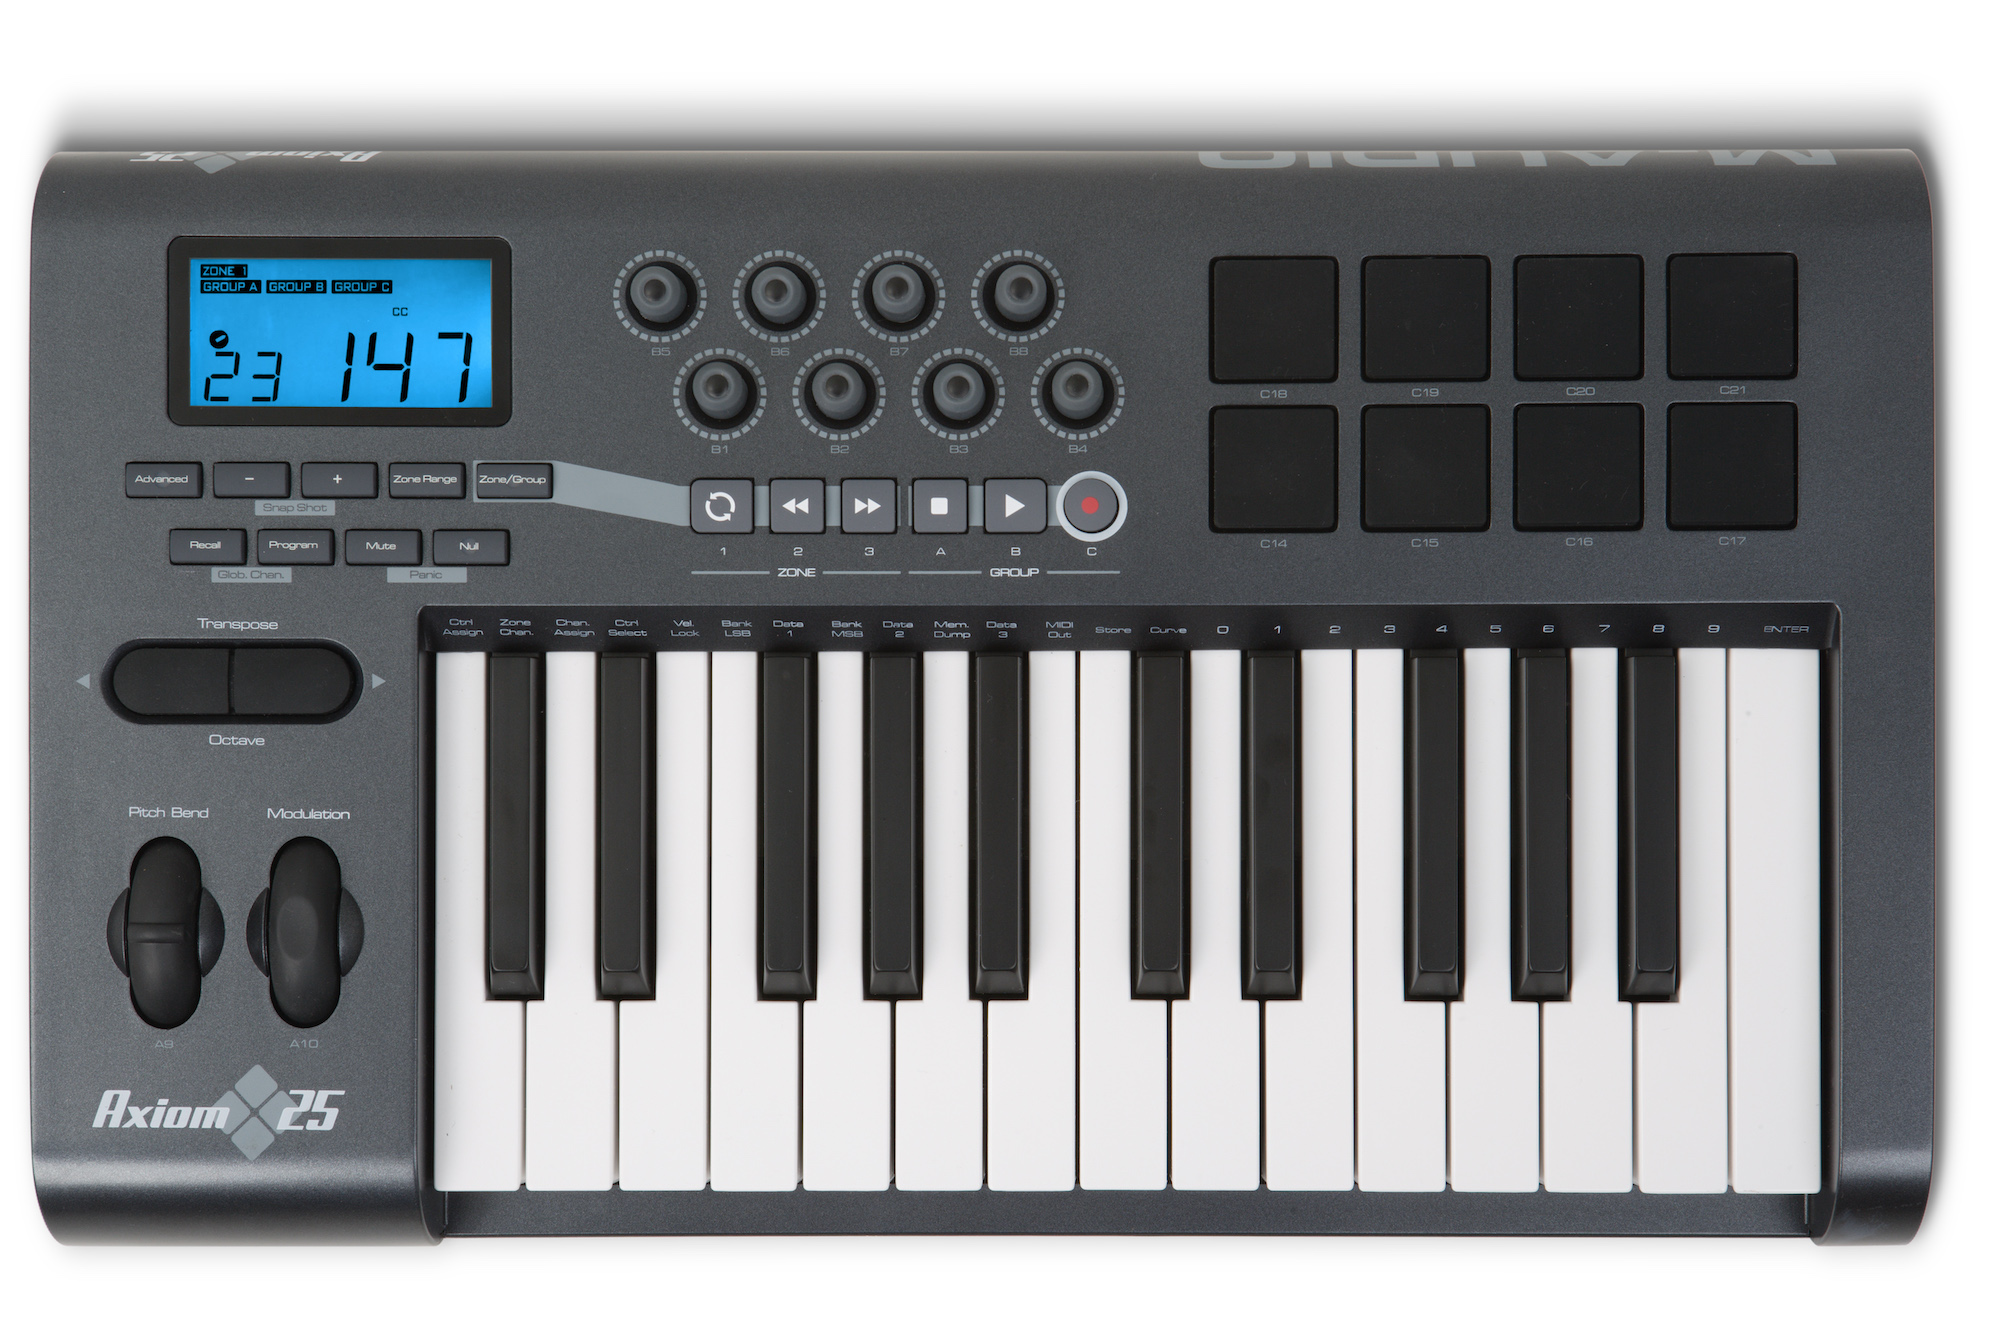 New MIDI Controller: M-Audio Axiom 25